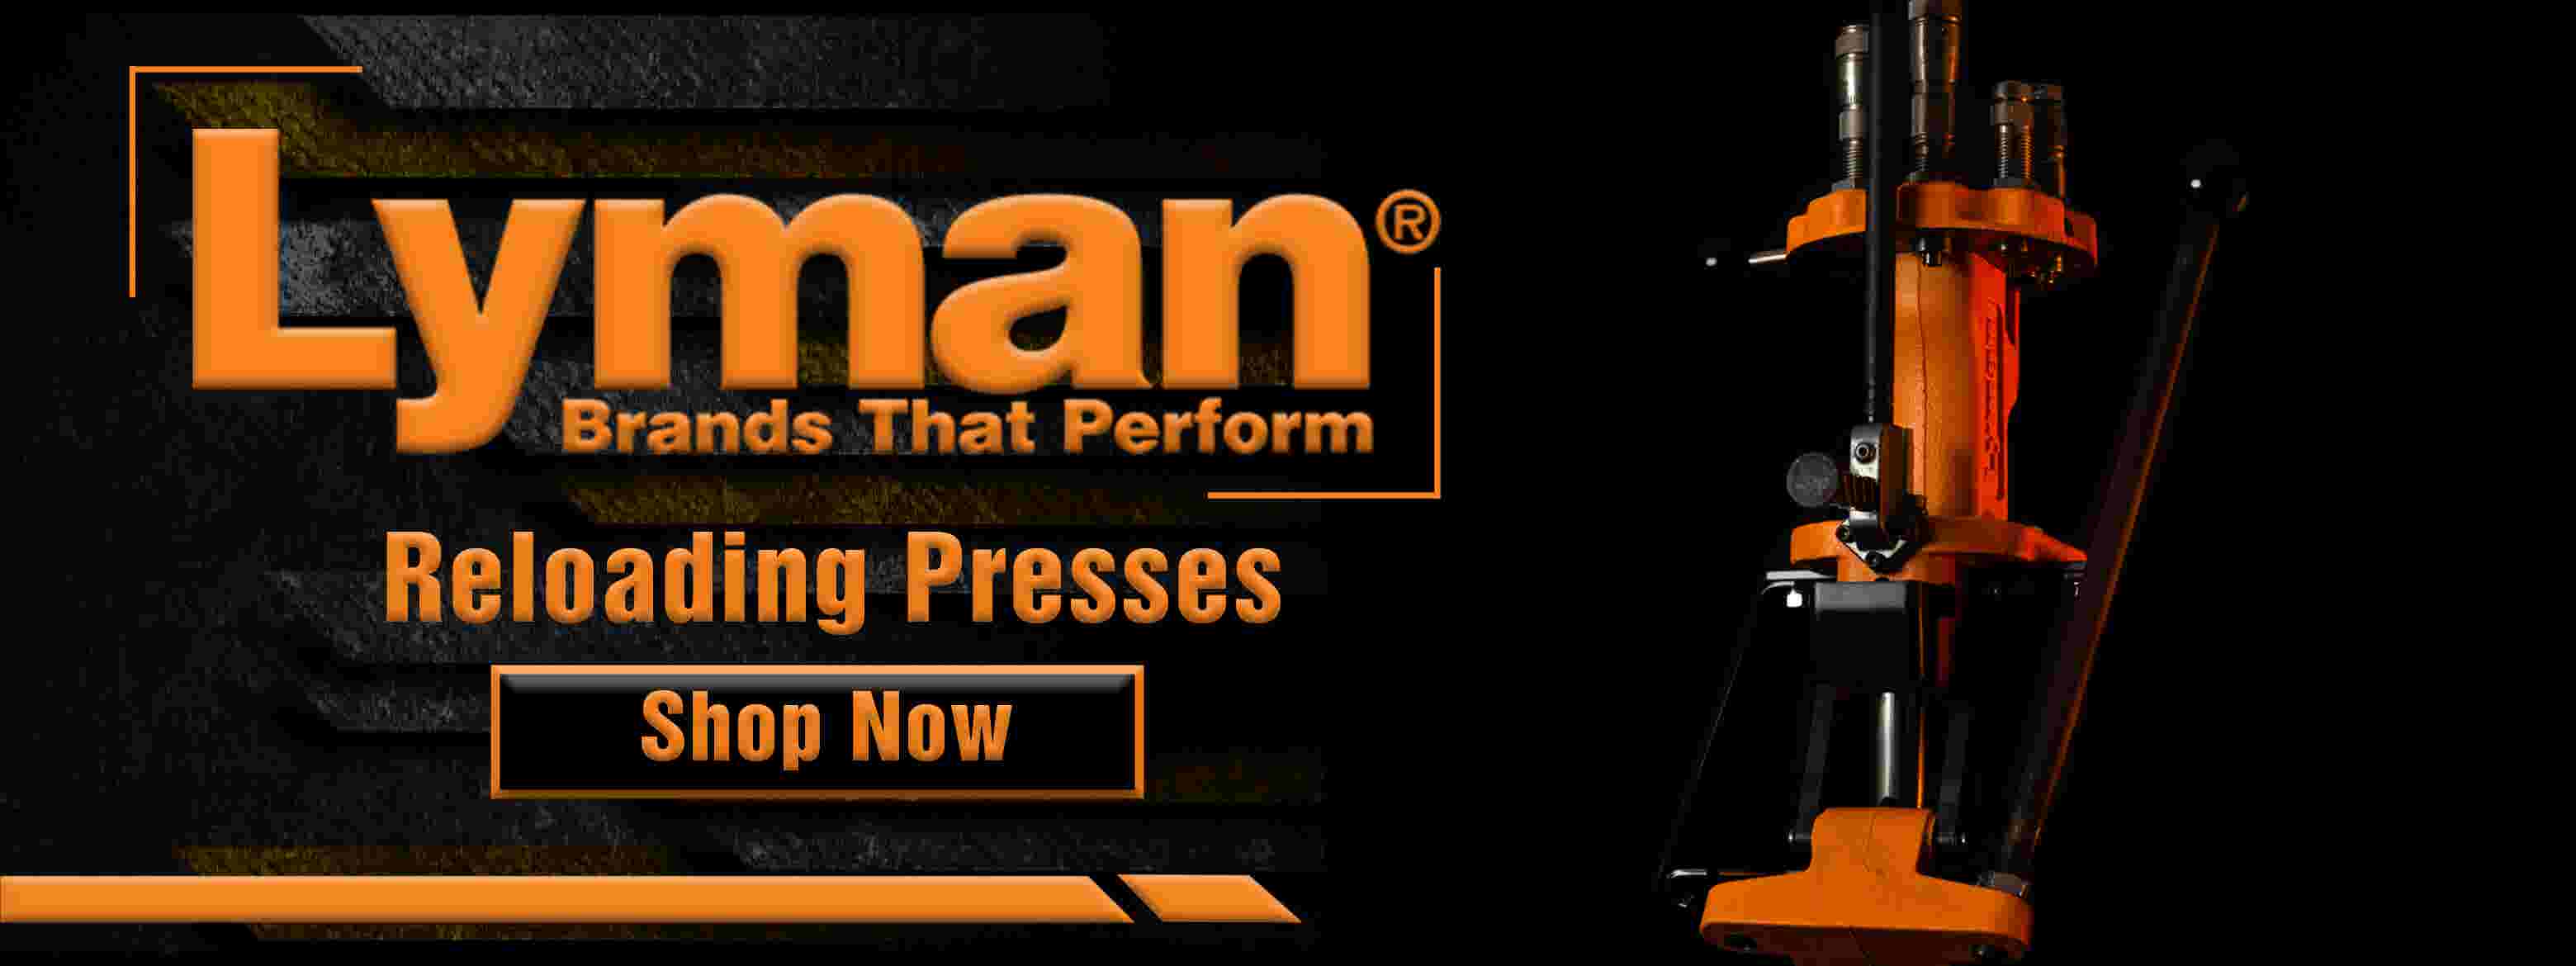 Lyman Mag 25 Digital Melting Furnace Lead Melting Pot